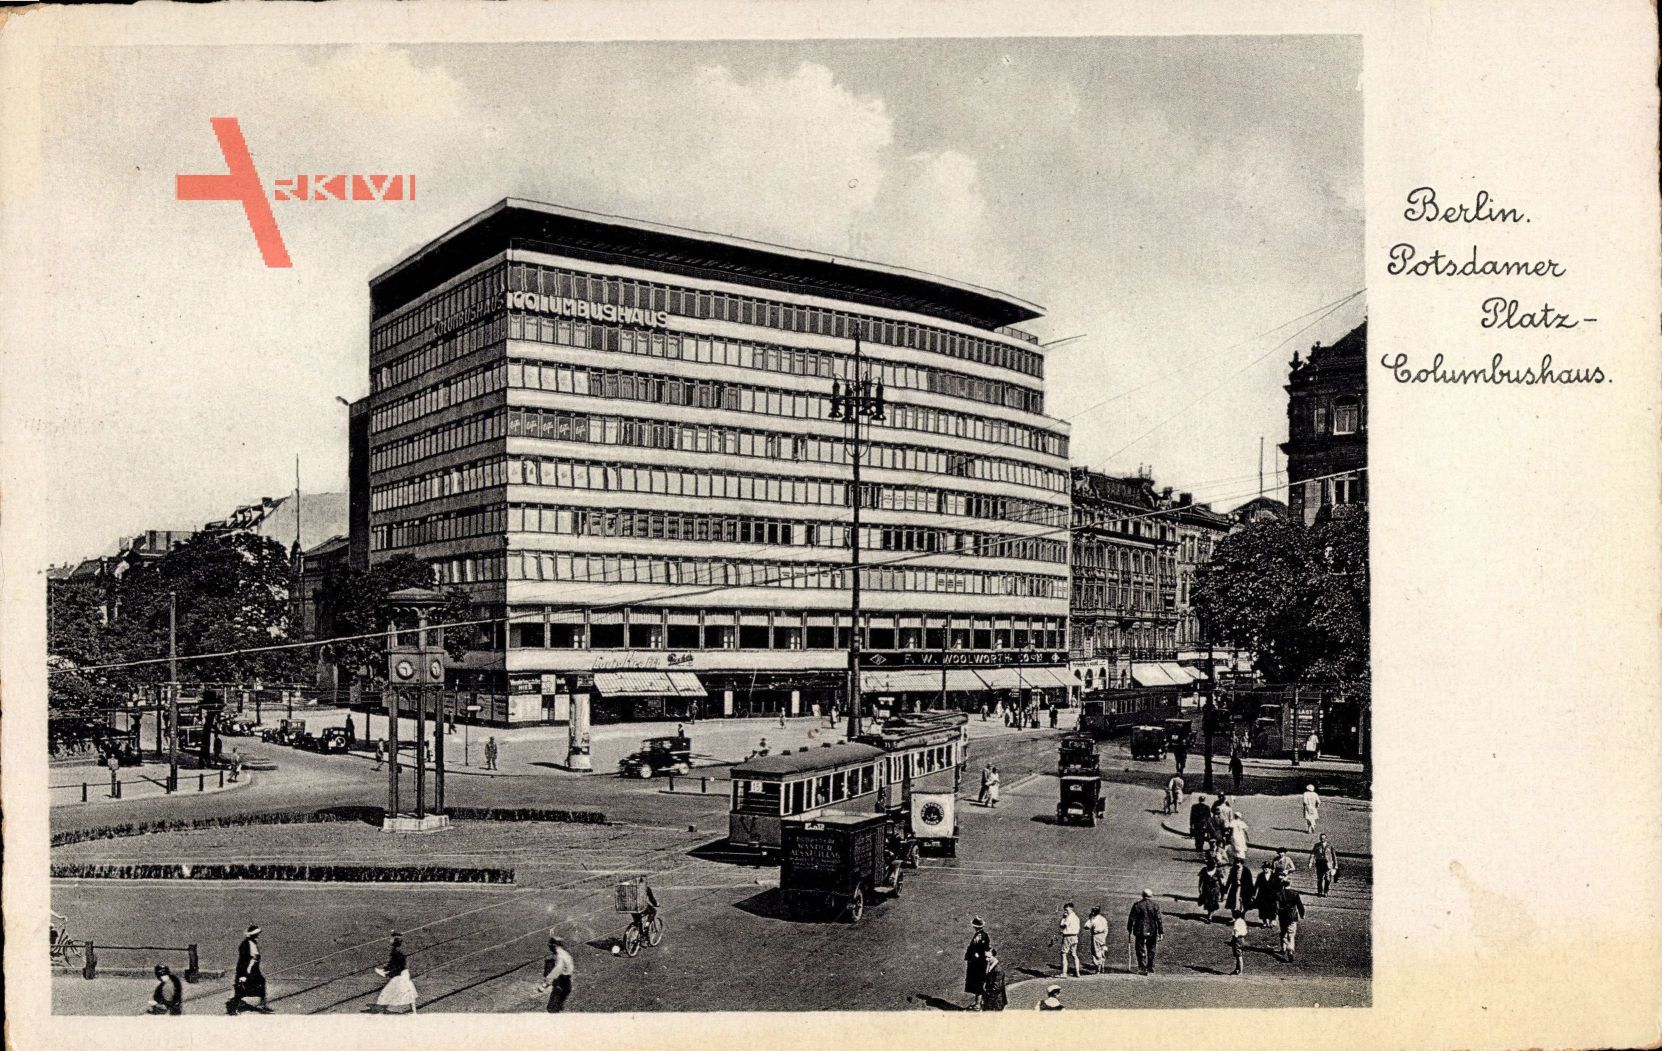 Berlin Tiergarten, Potsdamer Platz, Columbushaus, Straßenbahn